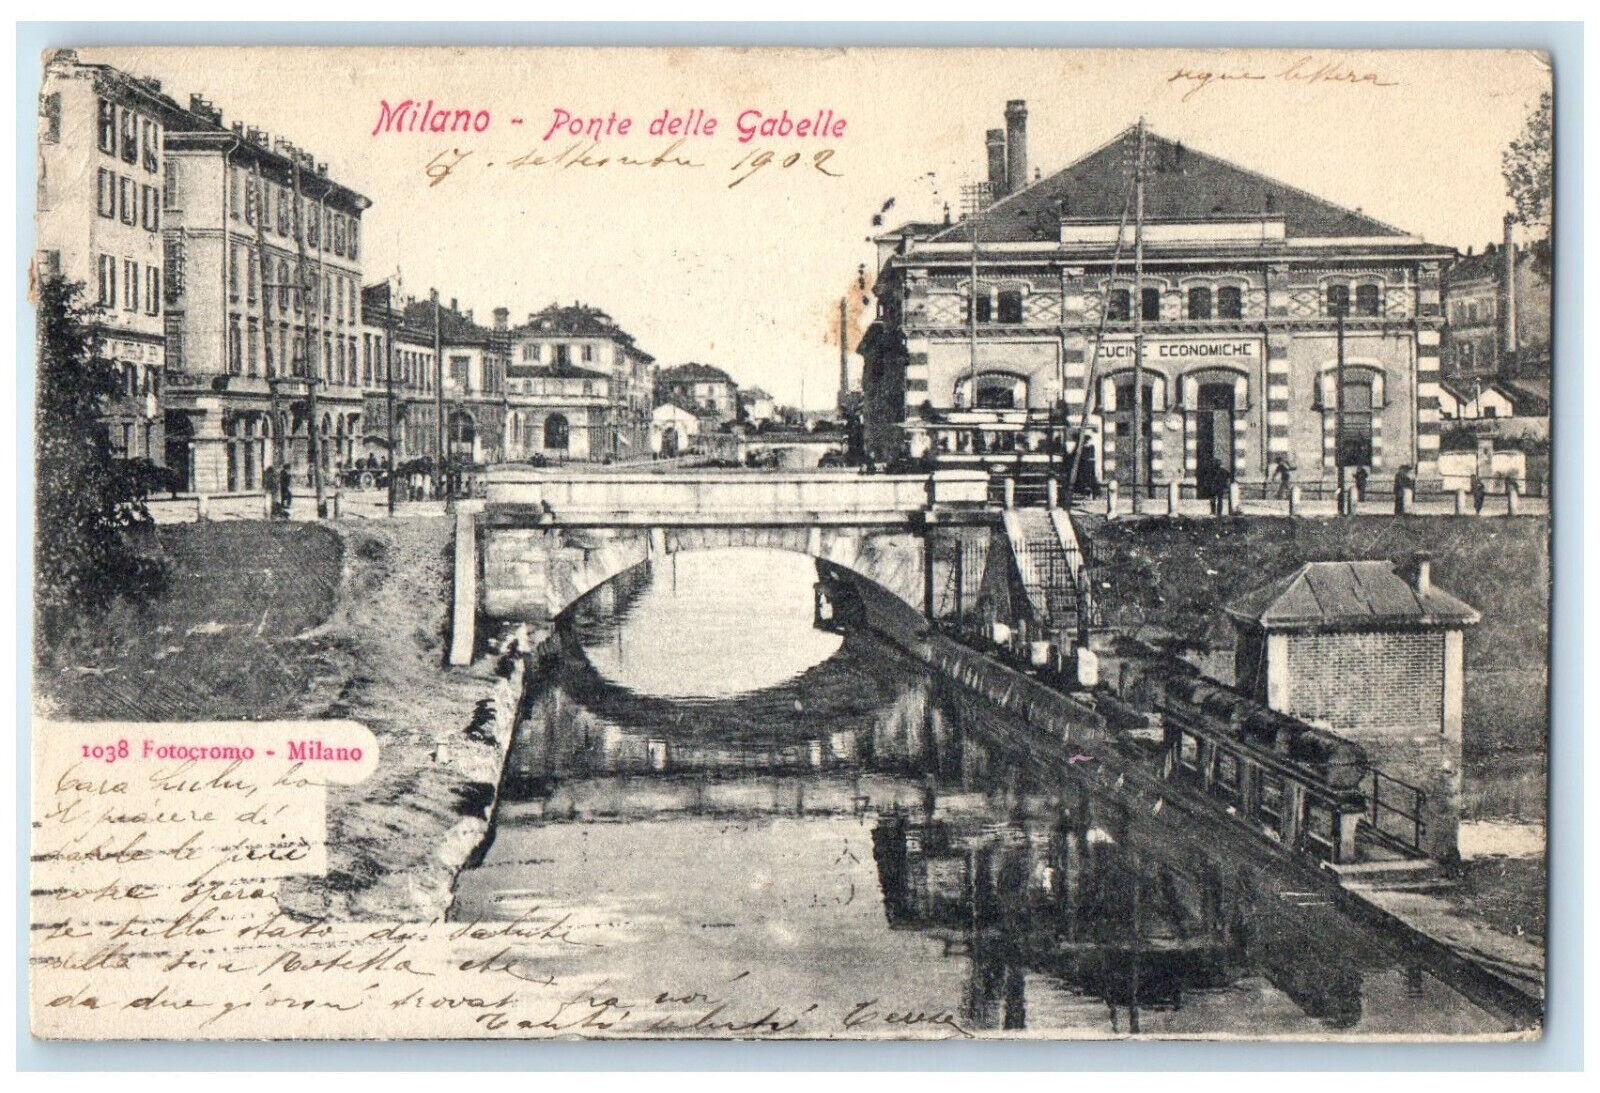 1902 Ponte Delle Gabelle Milan Italy Economiche Building Posted Postcard